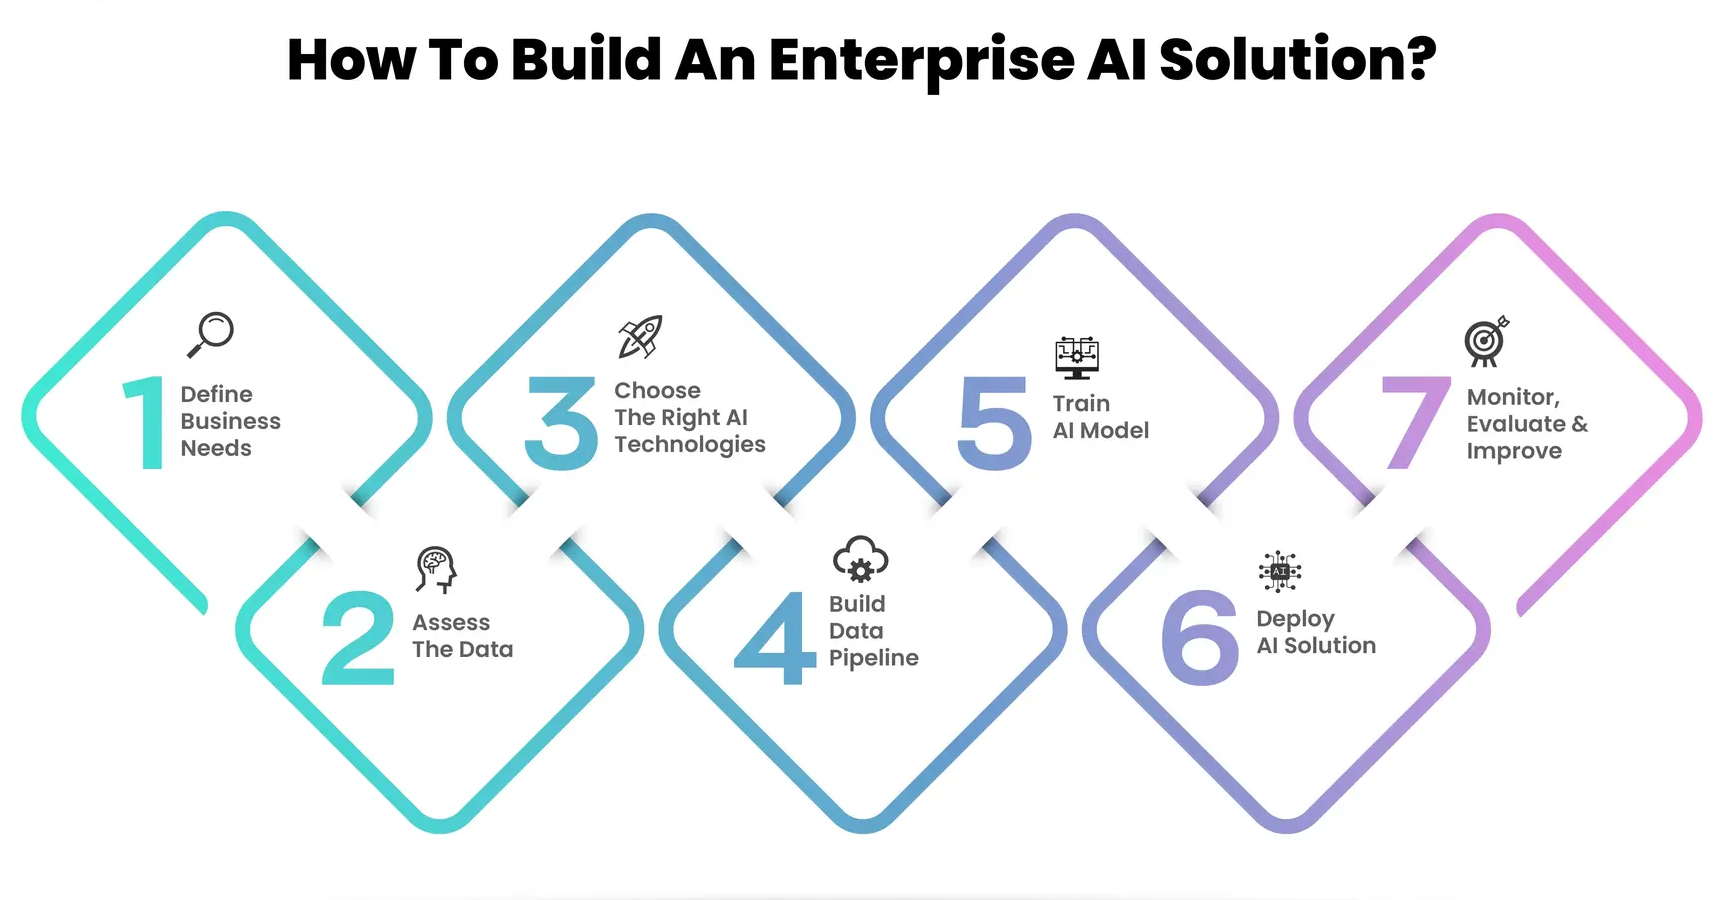 How to Build Enterprise AI Solutions: Steps